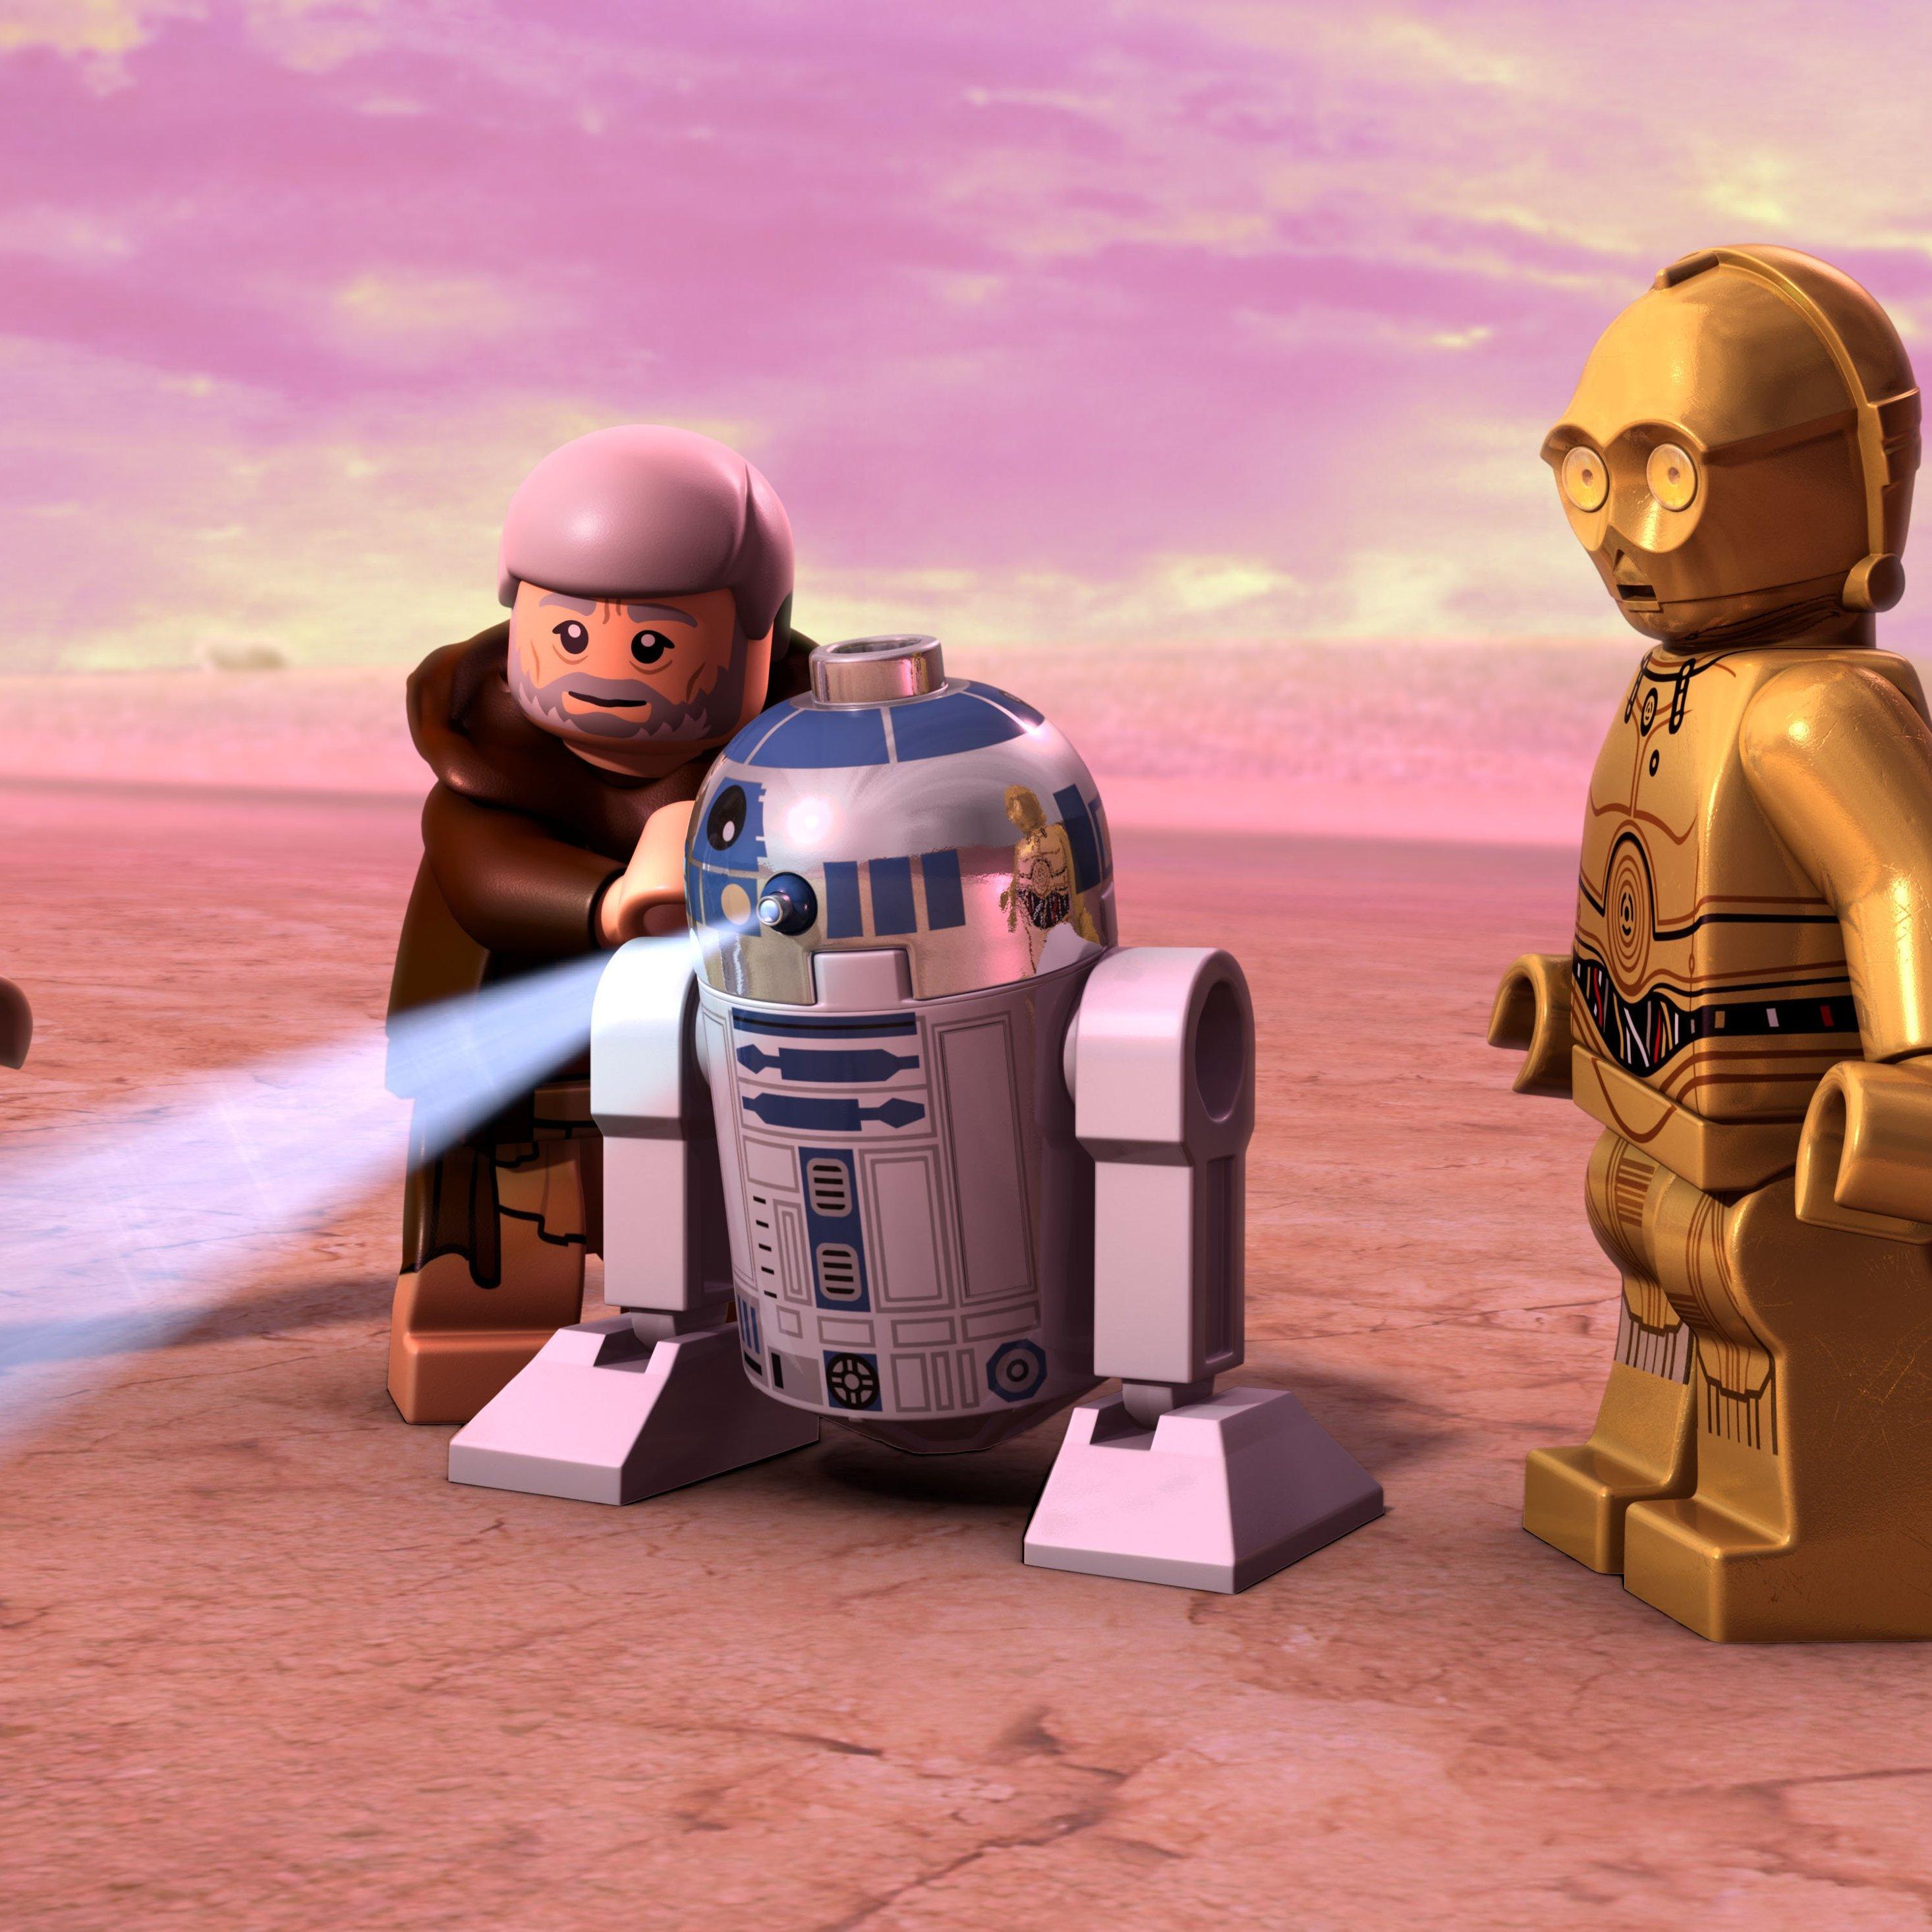 Lego Star Wars Ipad Wallpapers Top Free Lego Star Wars Ipad Backgrounds Wallpaperaccess